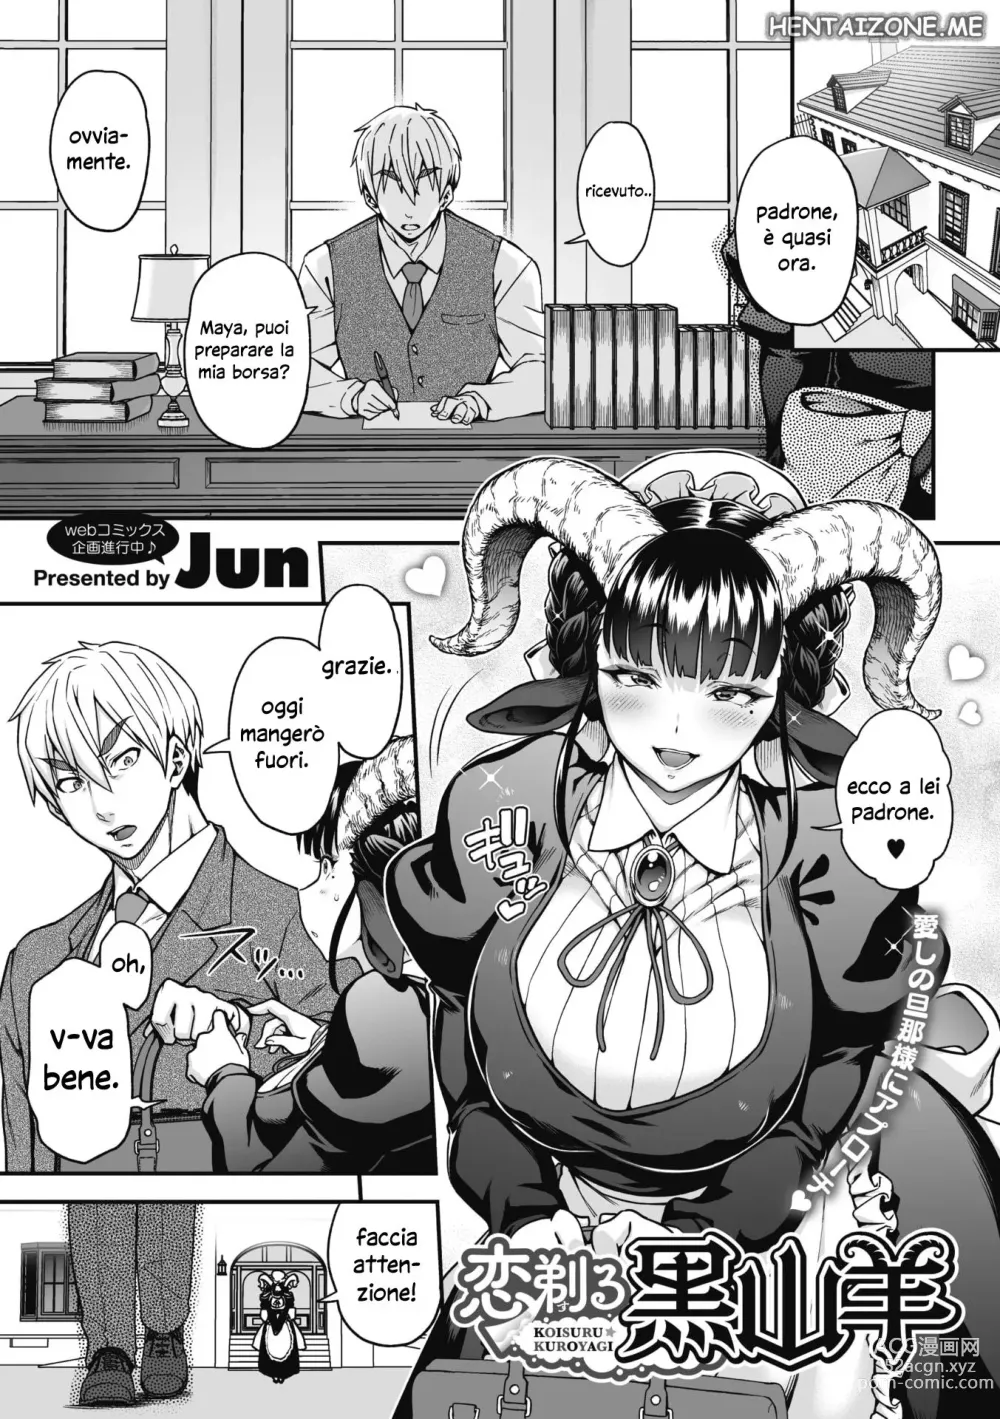 Page 2 of manga Rasatura Mensile